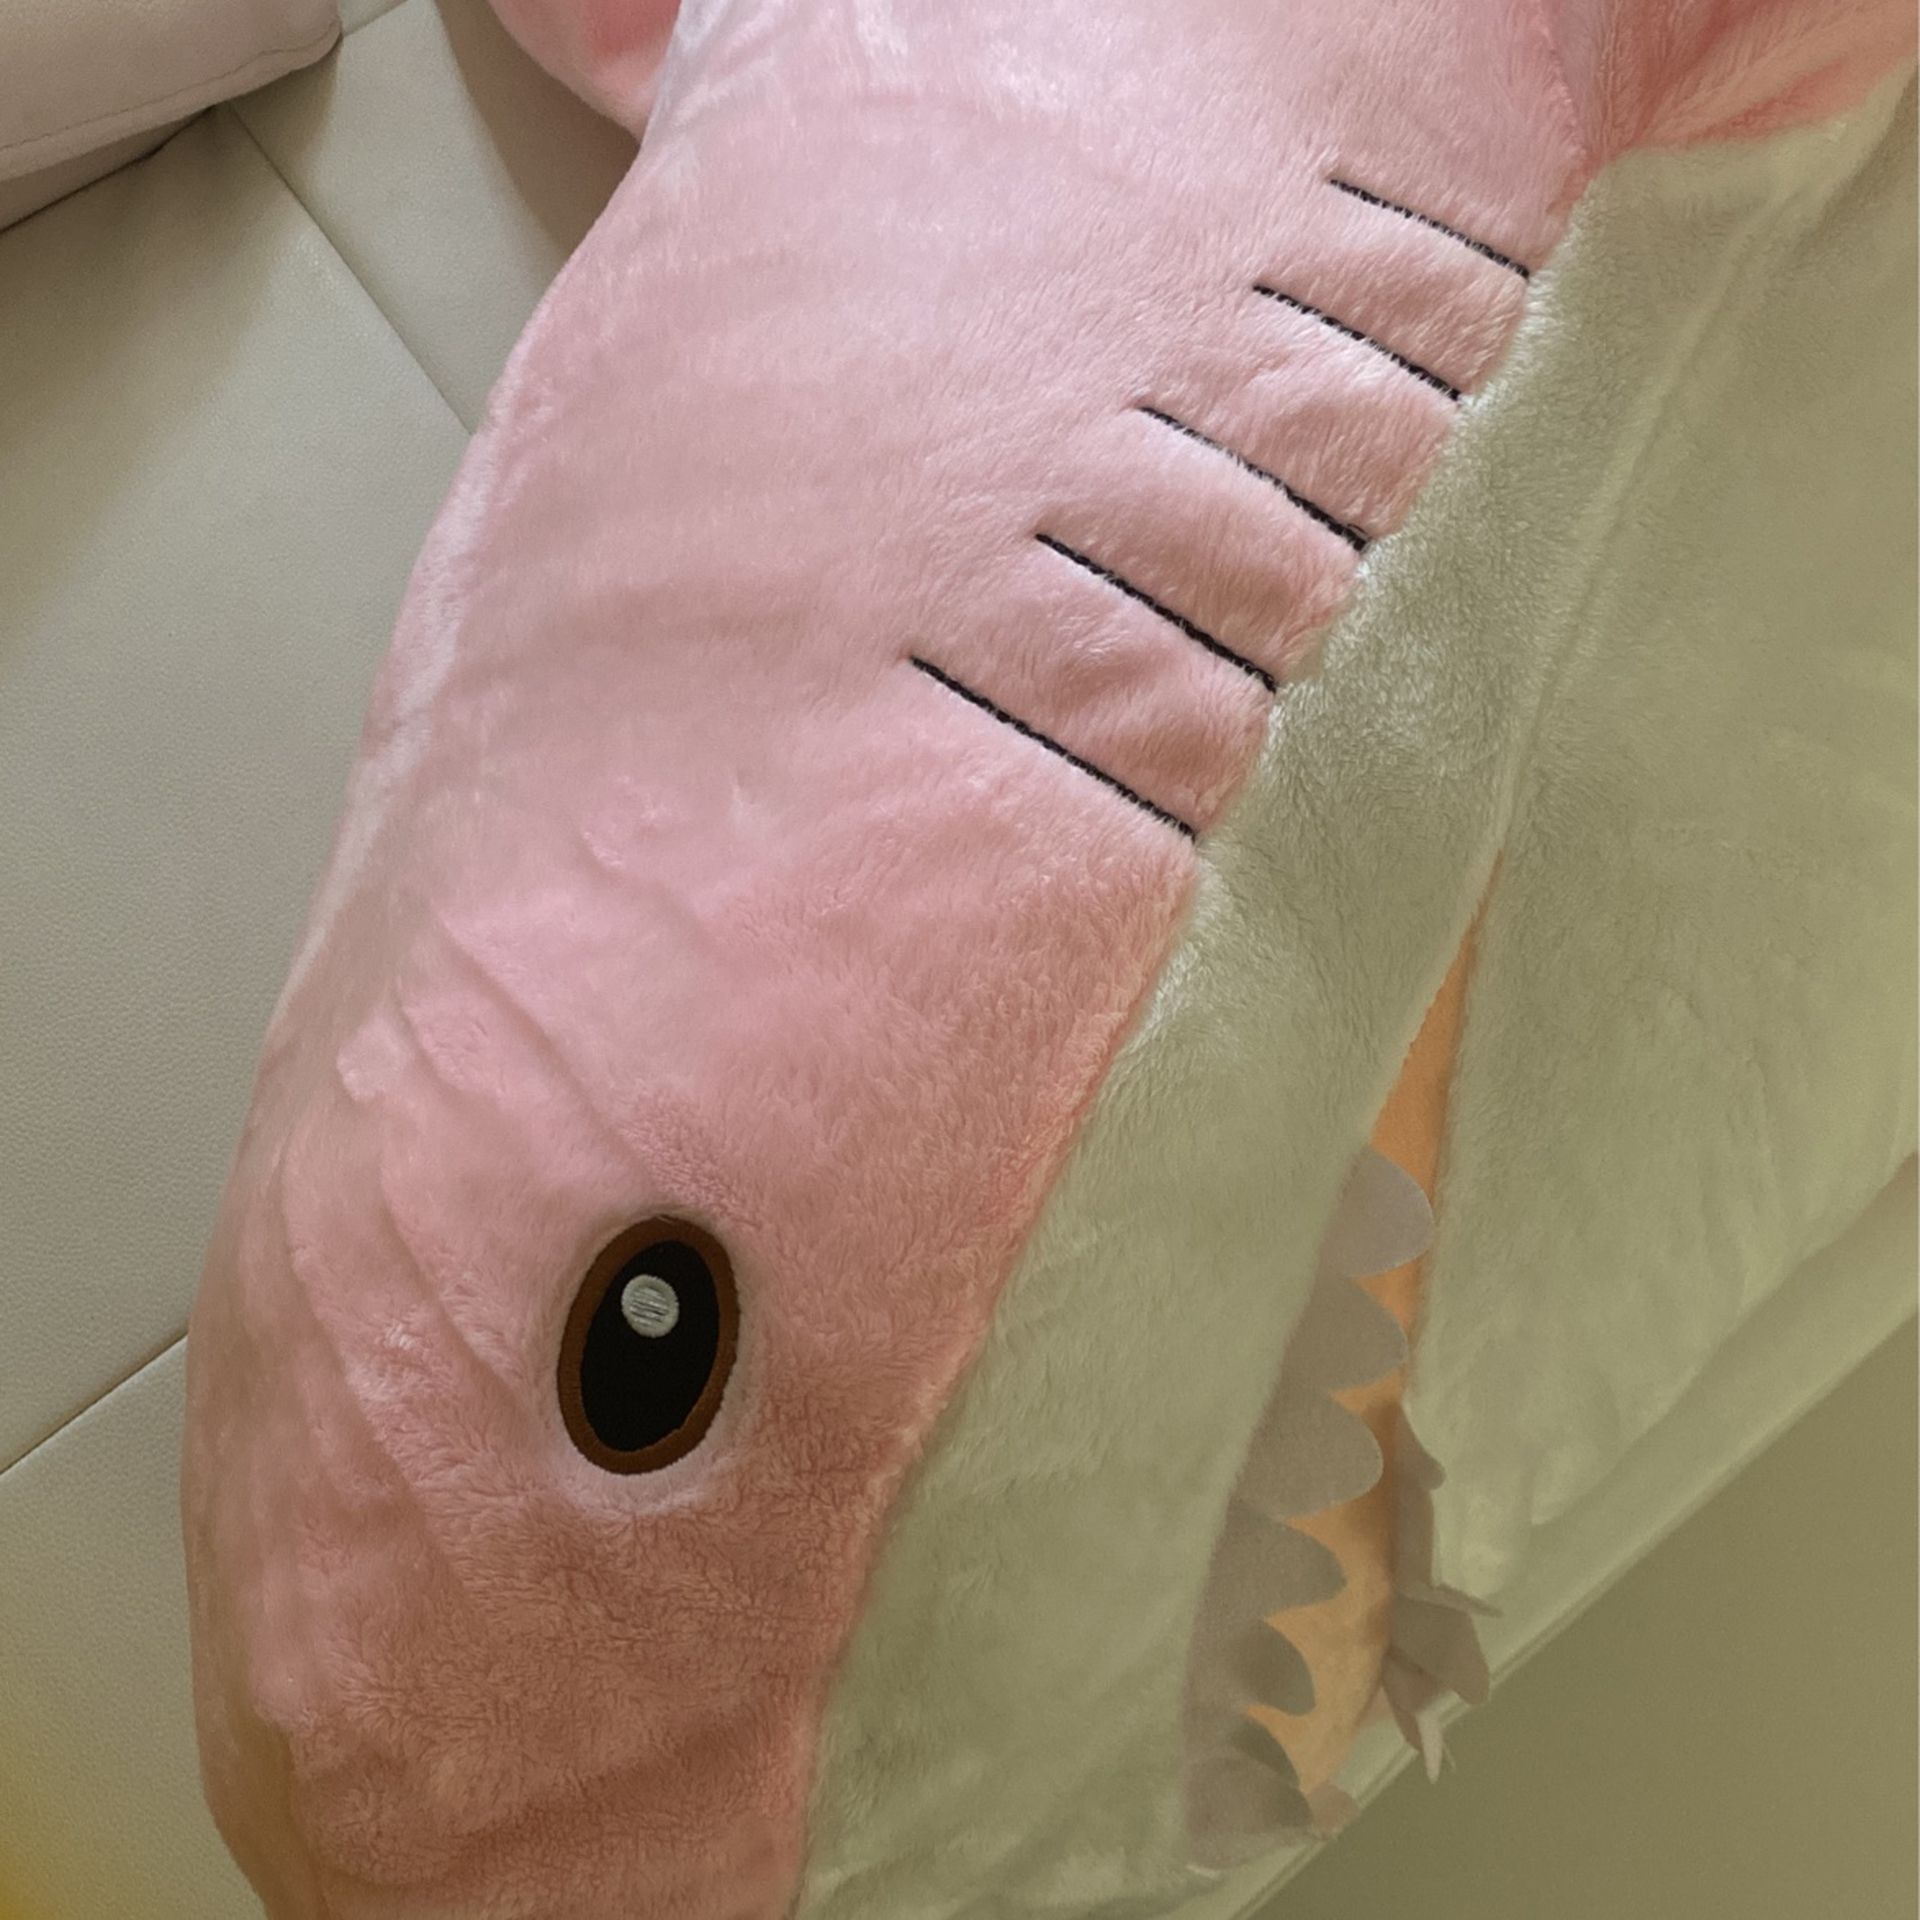 XLarge Pink Shark Plush 